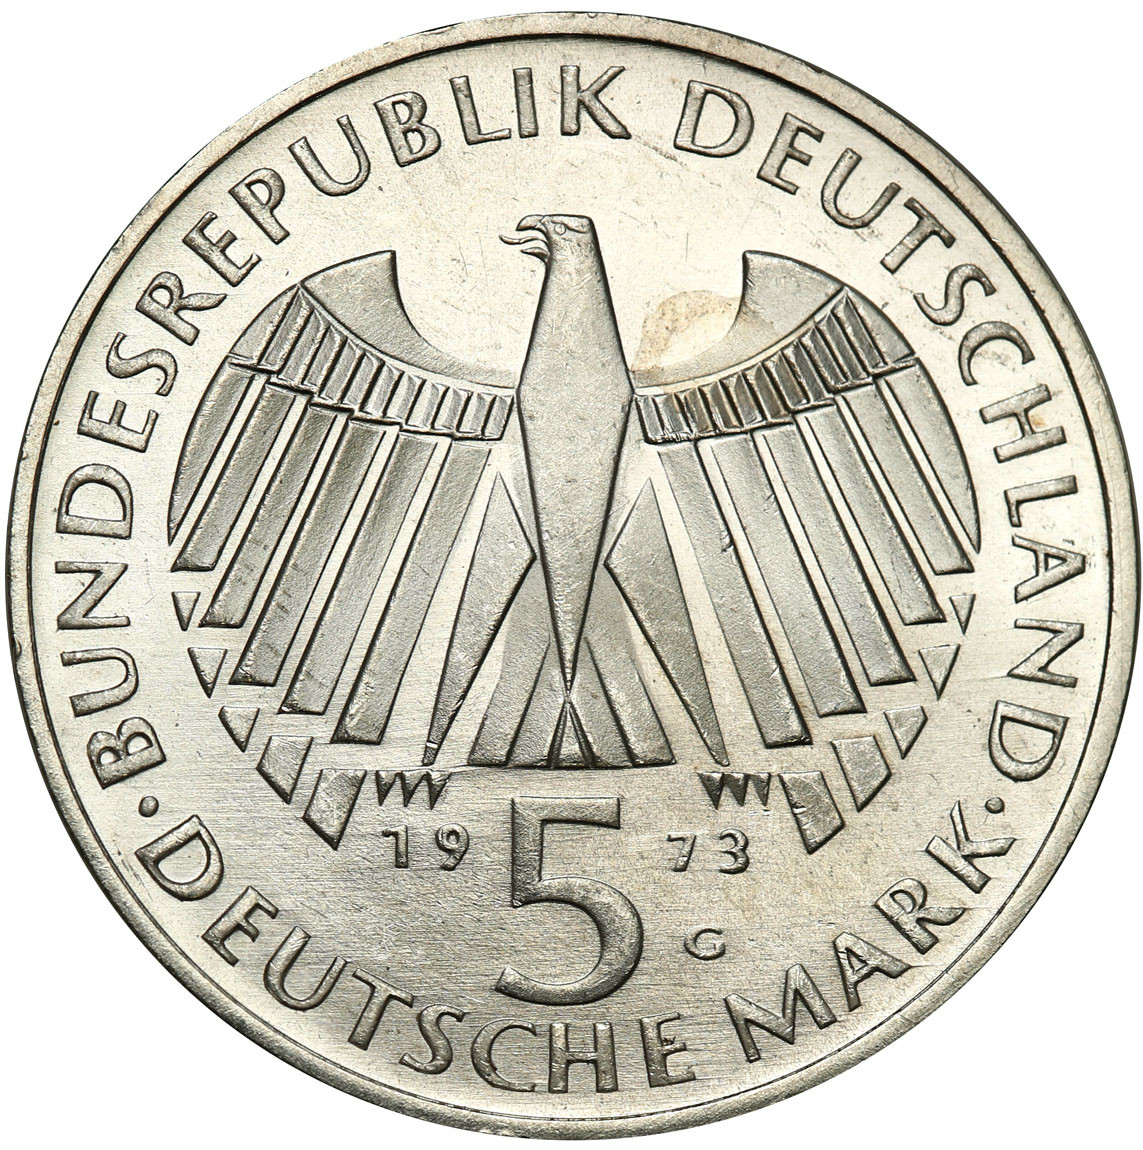 Niemcy, RFN. 5 marek 1973 G, Karlsruhe, Frankfurter Nationalversammlung